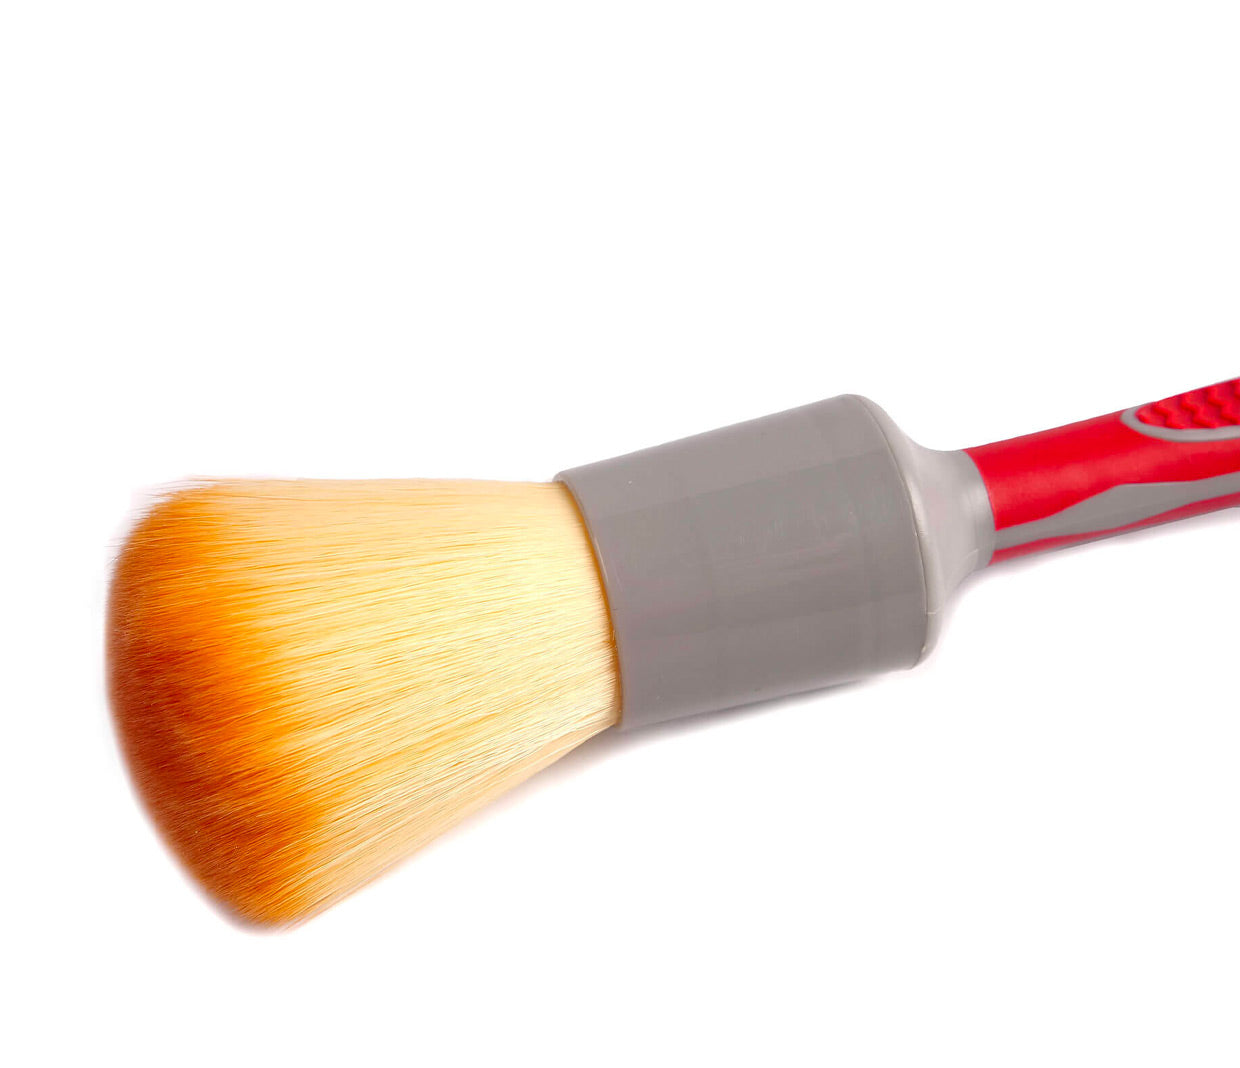 Maxshine Detailing Brush - Red & Grey - Ultra Soft 14mm